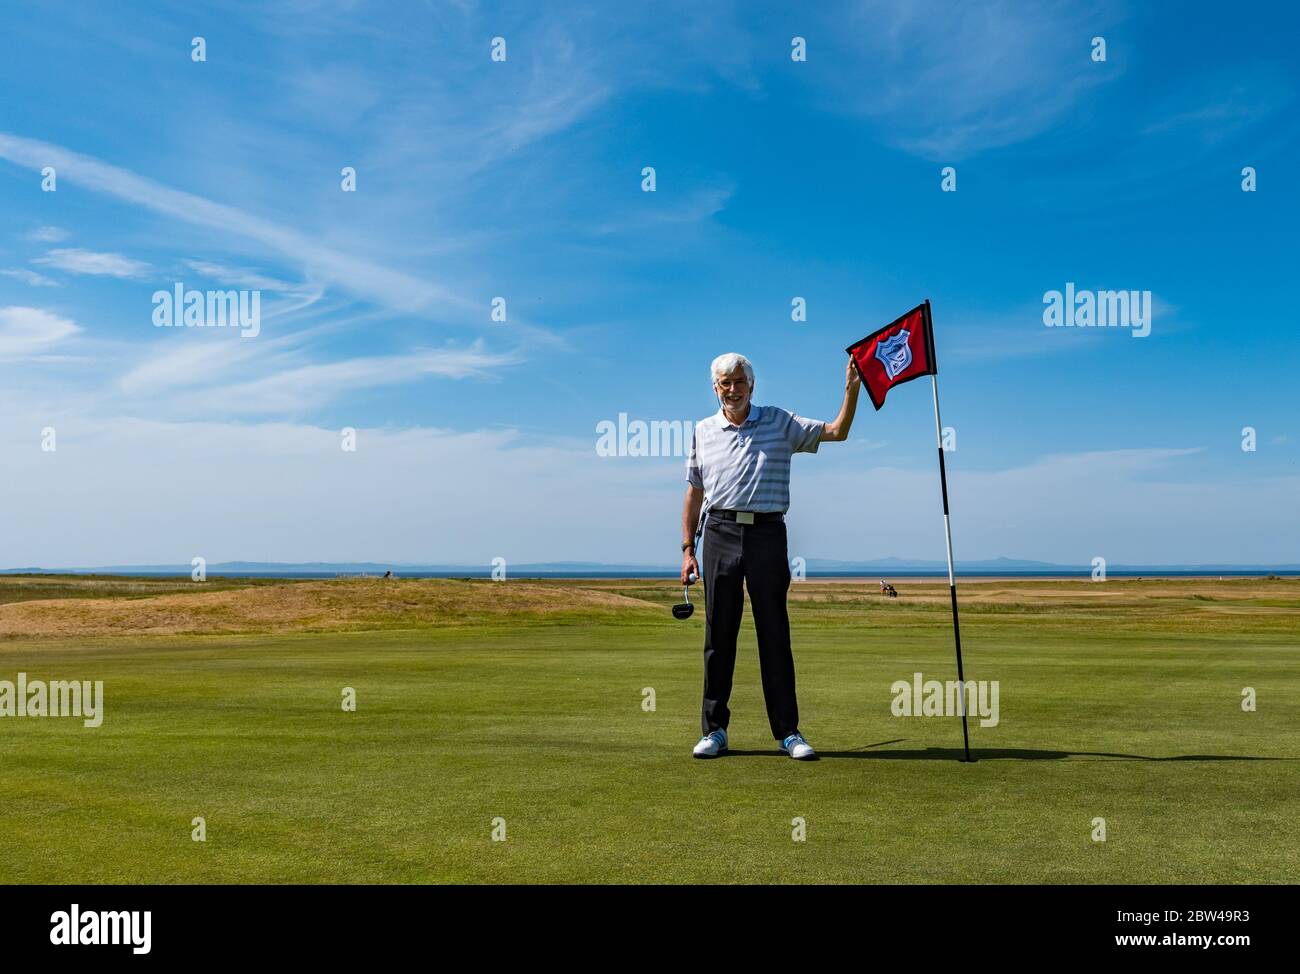 Man playing golf on putting green, Golf Club reopening, Kilspindie golf course, Aberlady, Scotland, UK Stock Photo